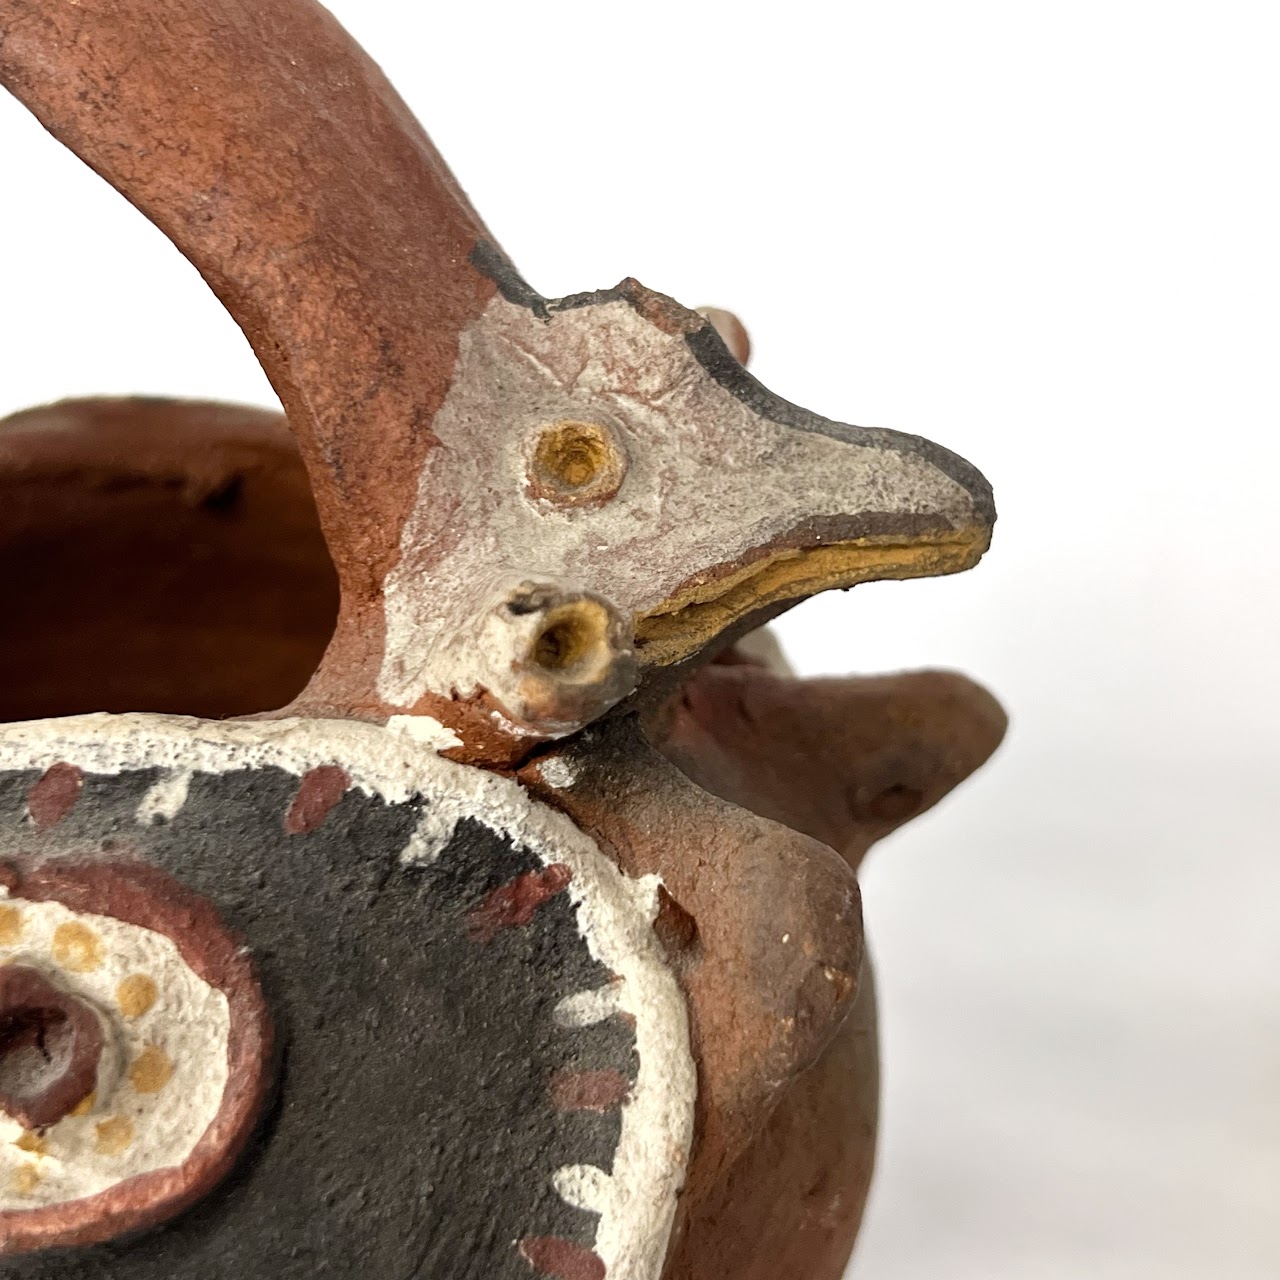 Papua New Guinean Janus Form Ceramic Vessel